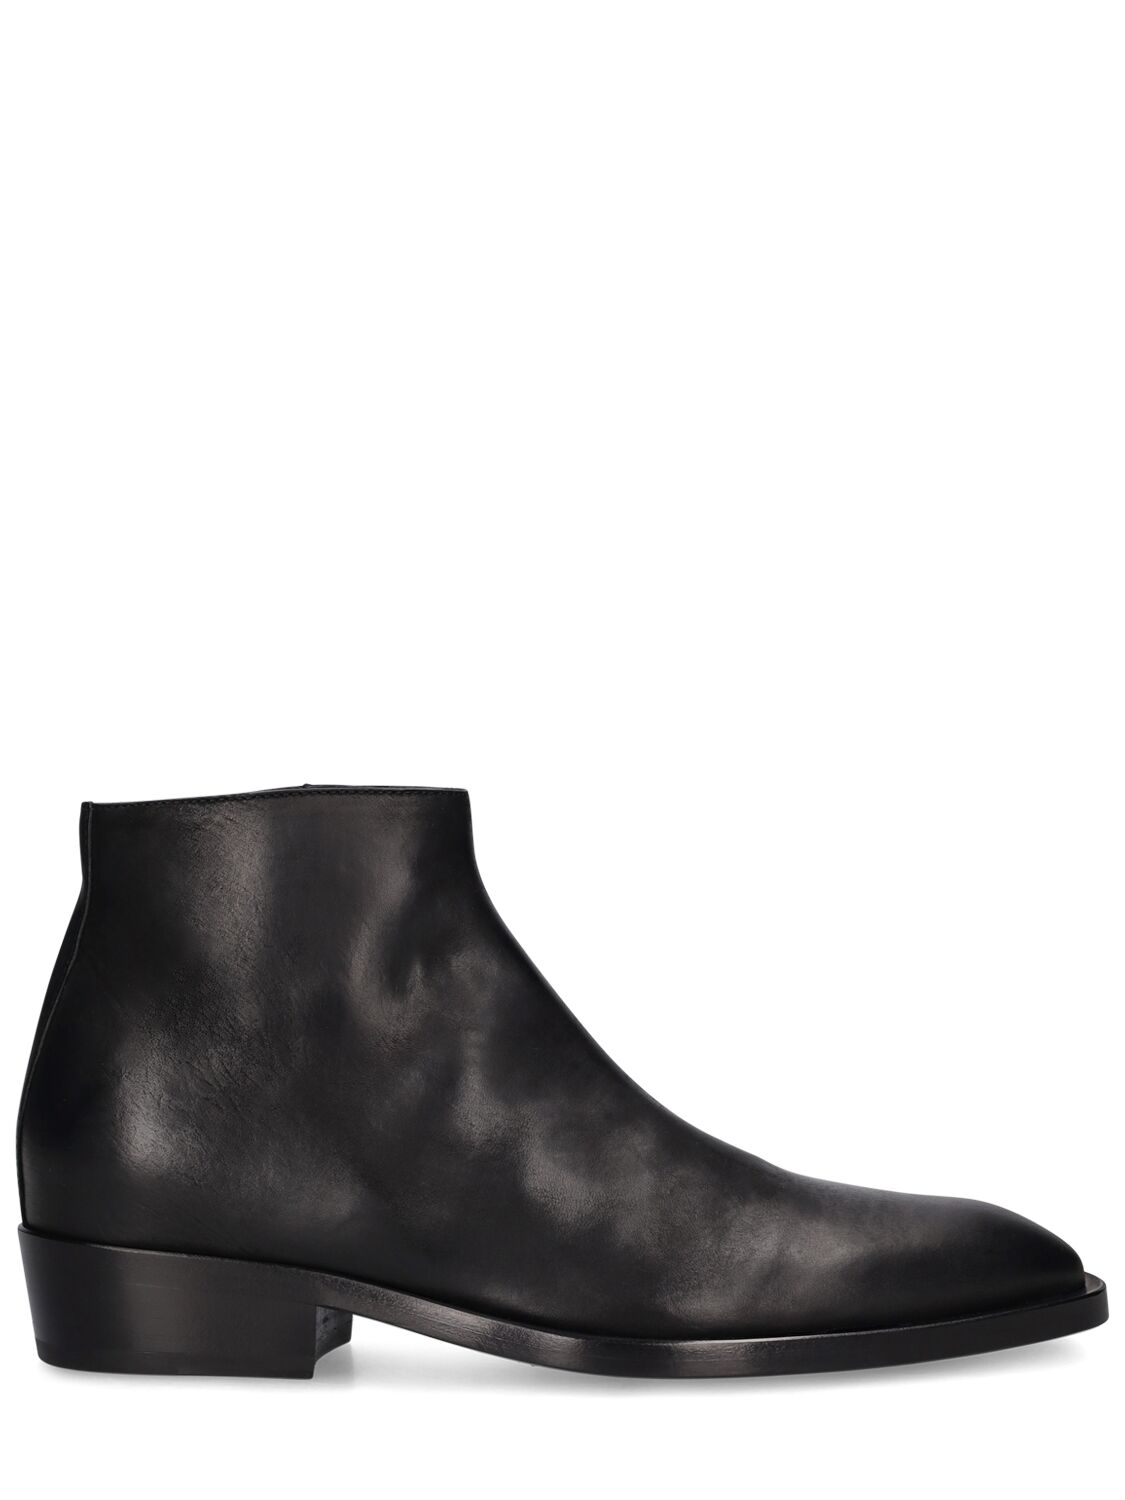 Bandolero Leather Boots